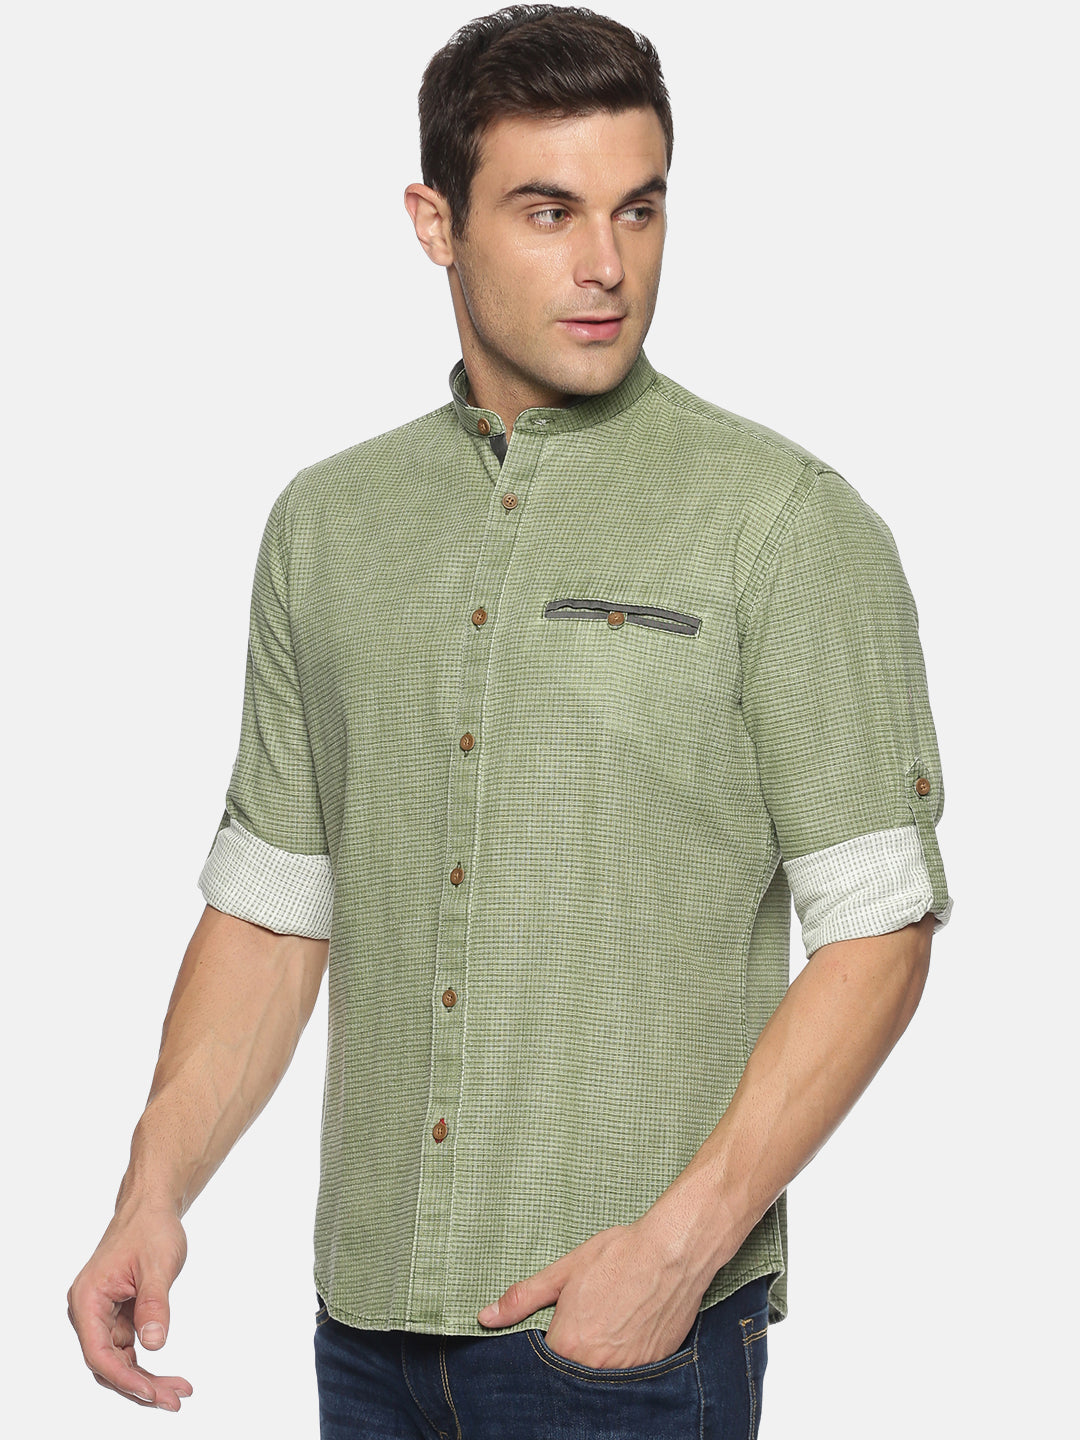 Don Vino Men's Green Checkered Full Sleeve Casual Shirt